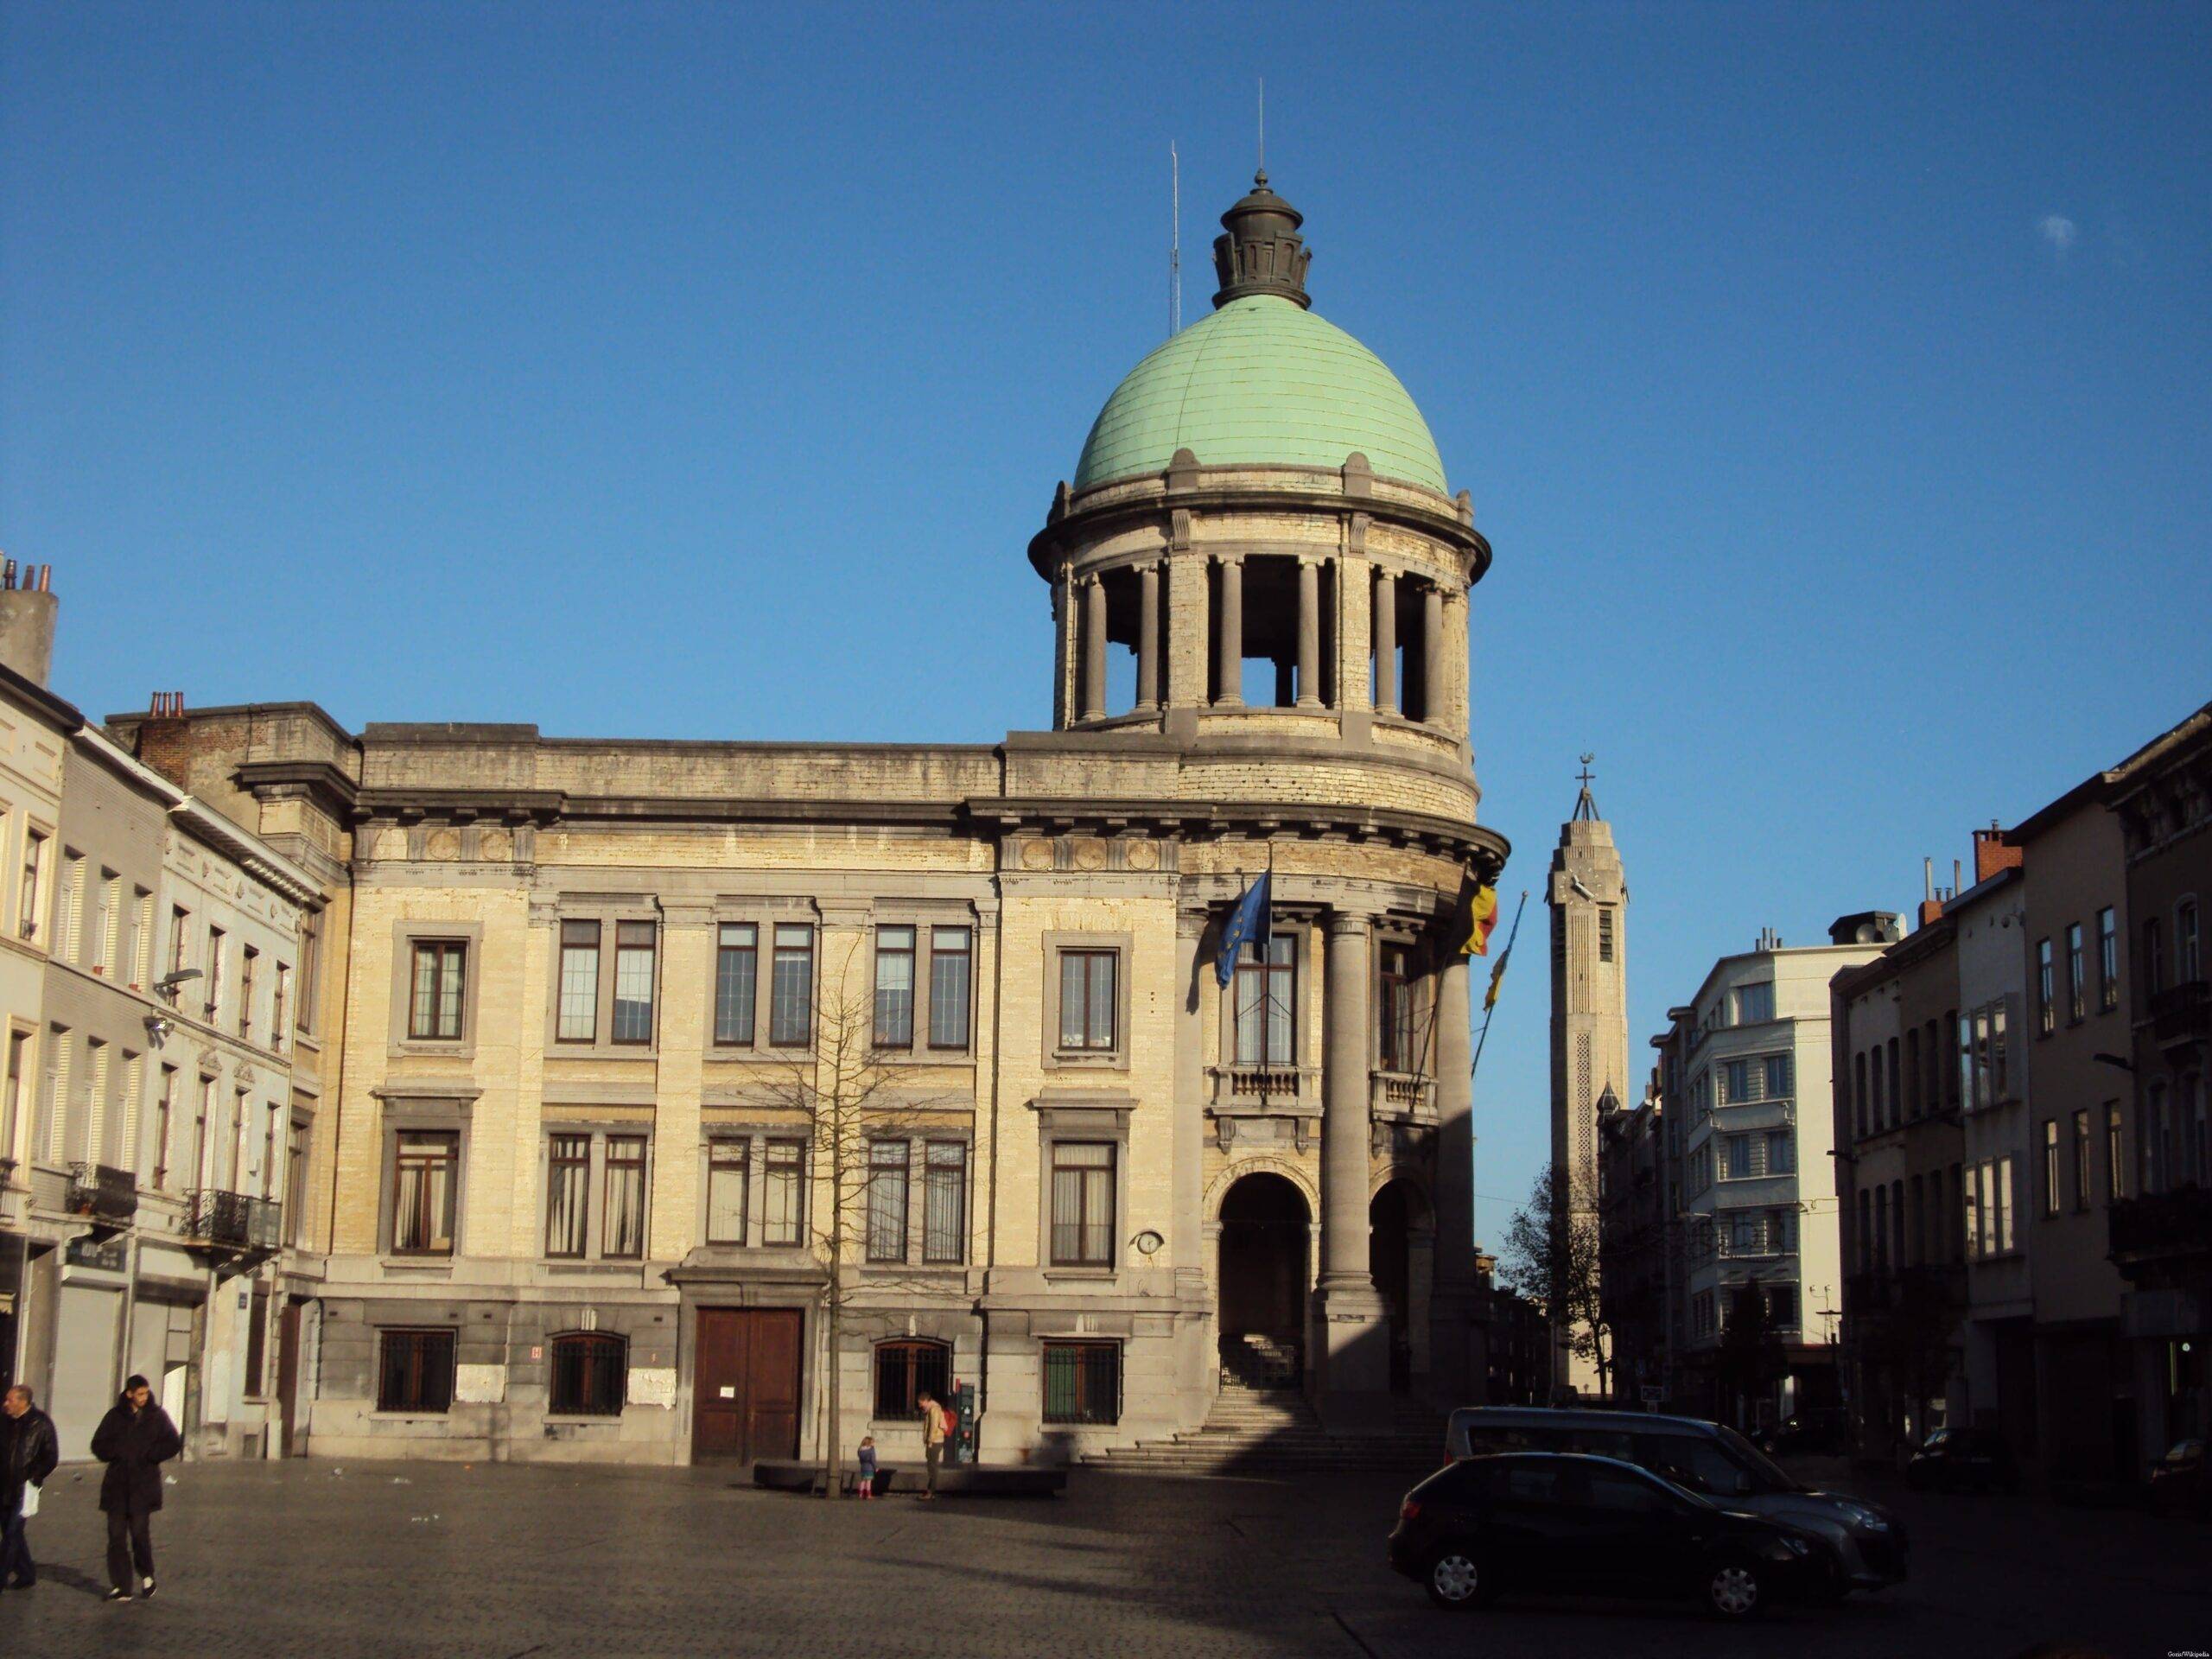 Sint-Jans-Molenbeek, Belgium, City Hall on November 28, 2015 [Goris/Wikipedia]